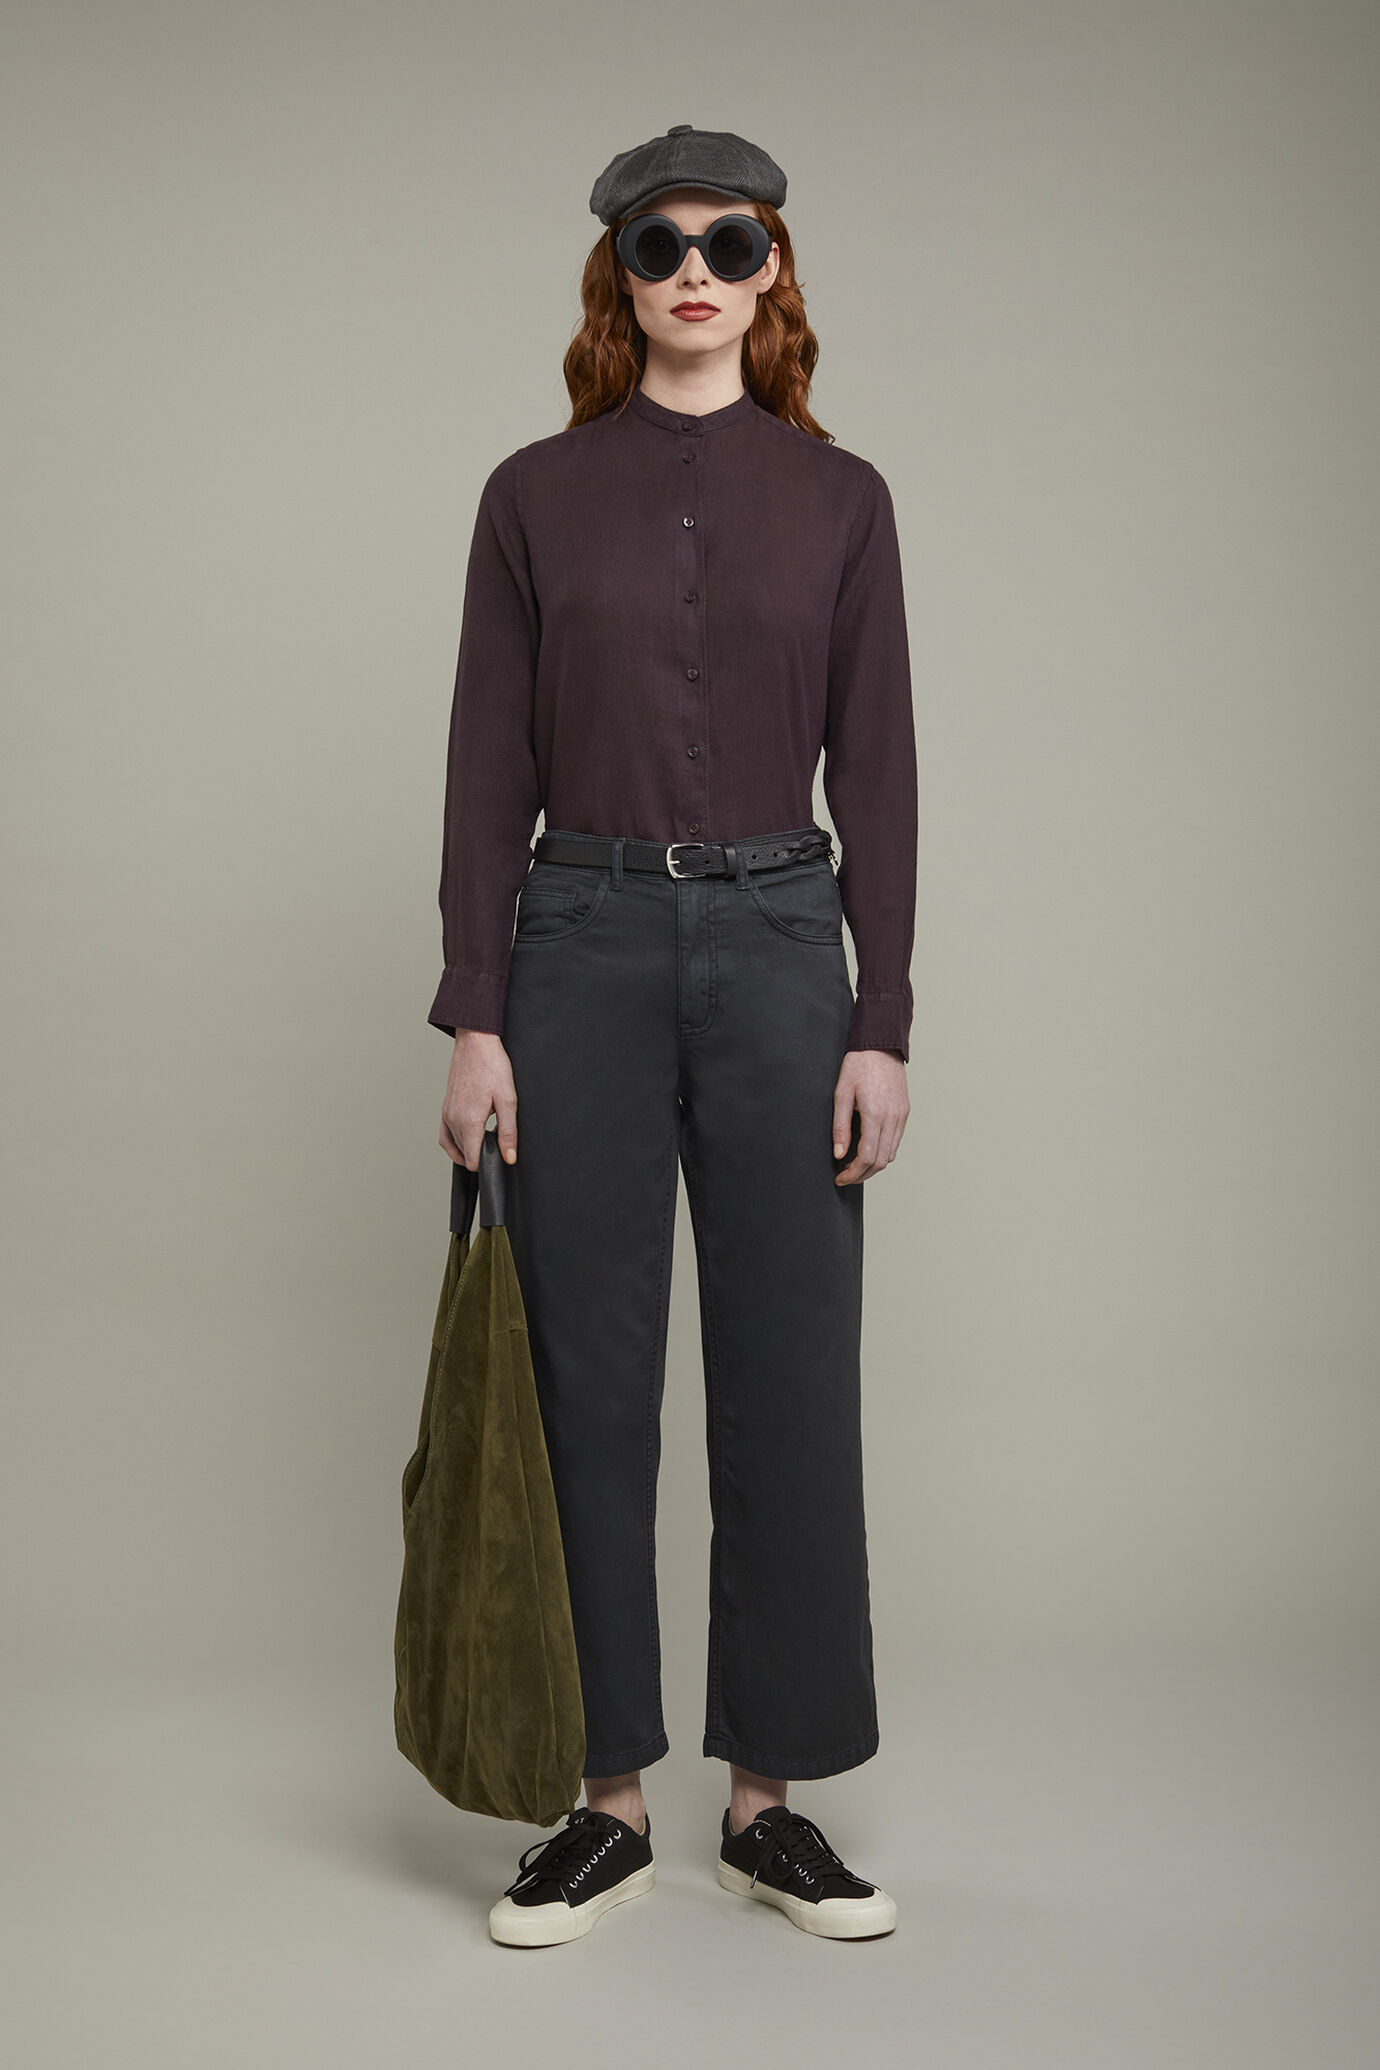 Women’s 5 pockets trousers 100% cotton regular fit